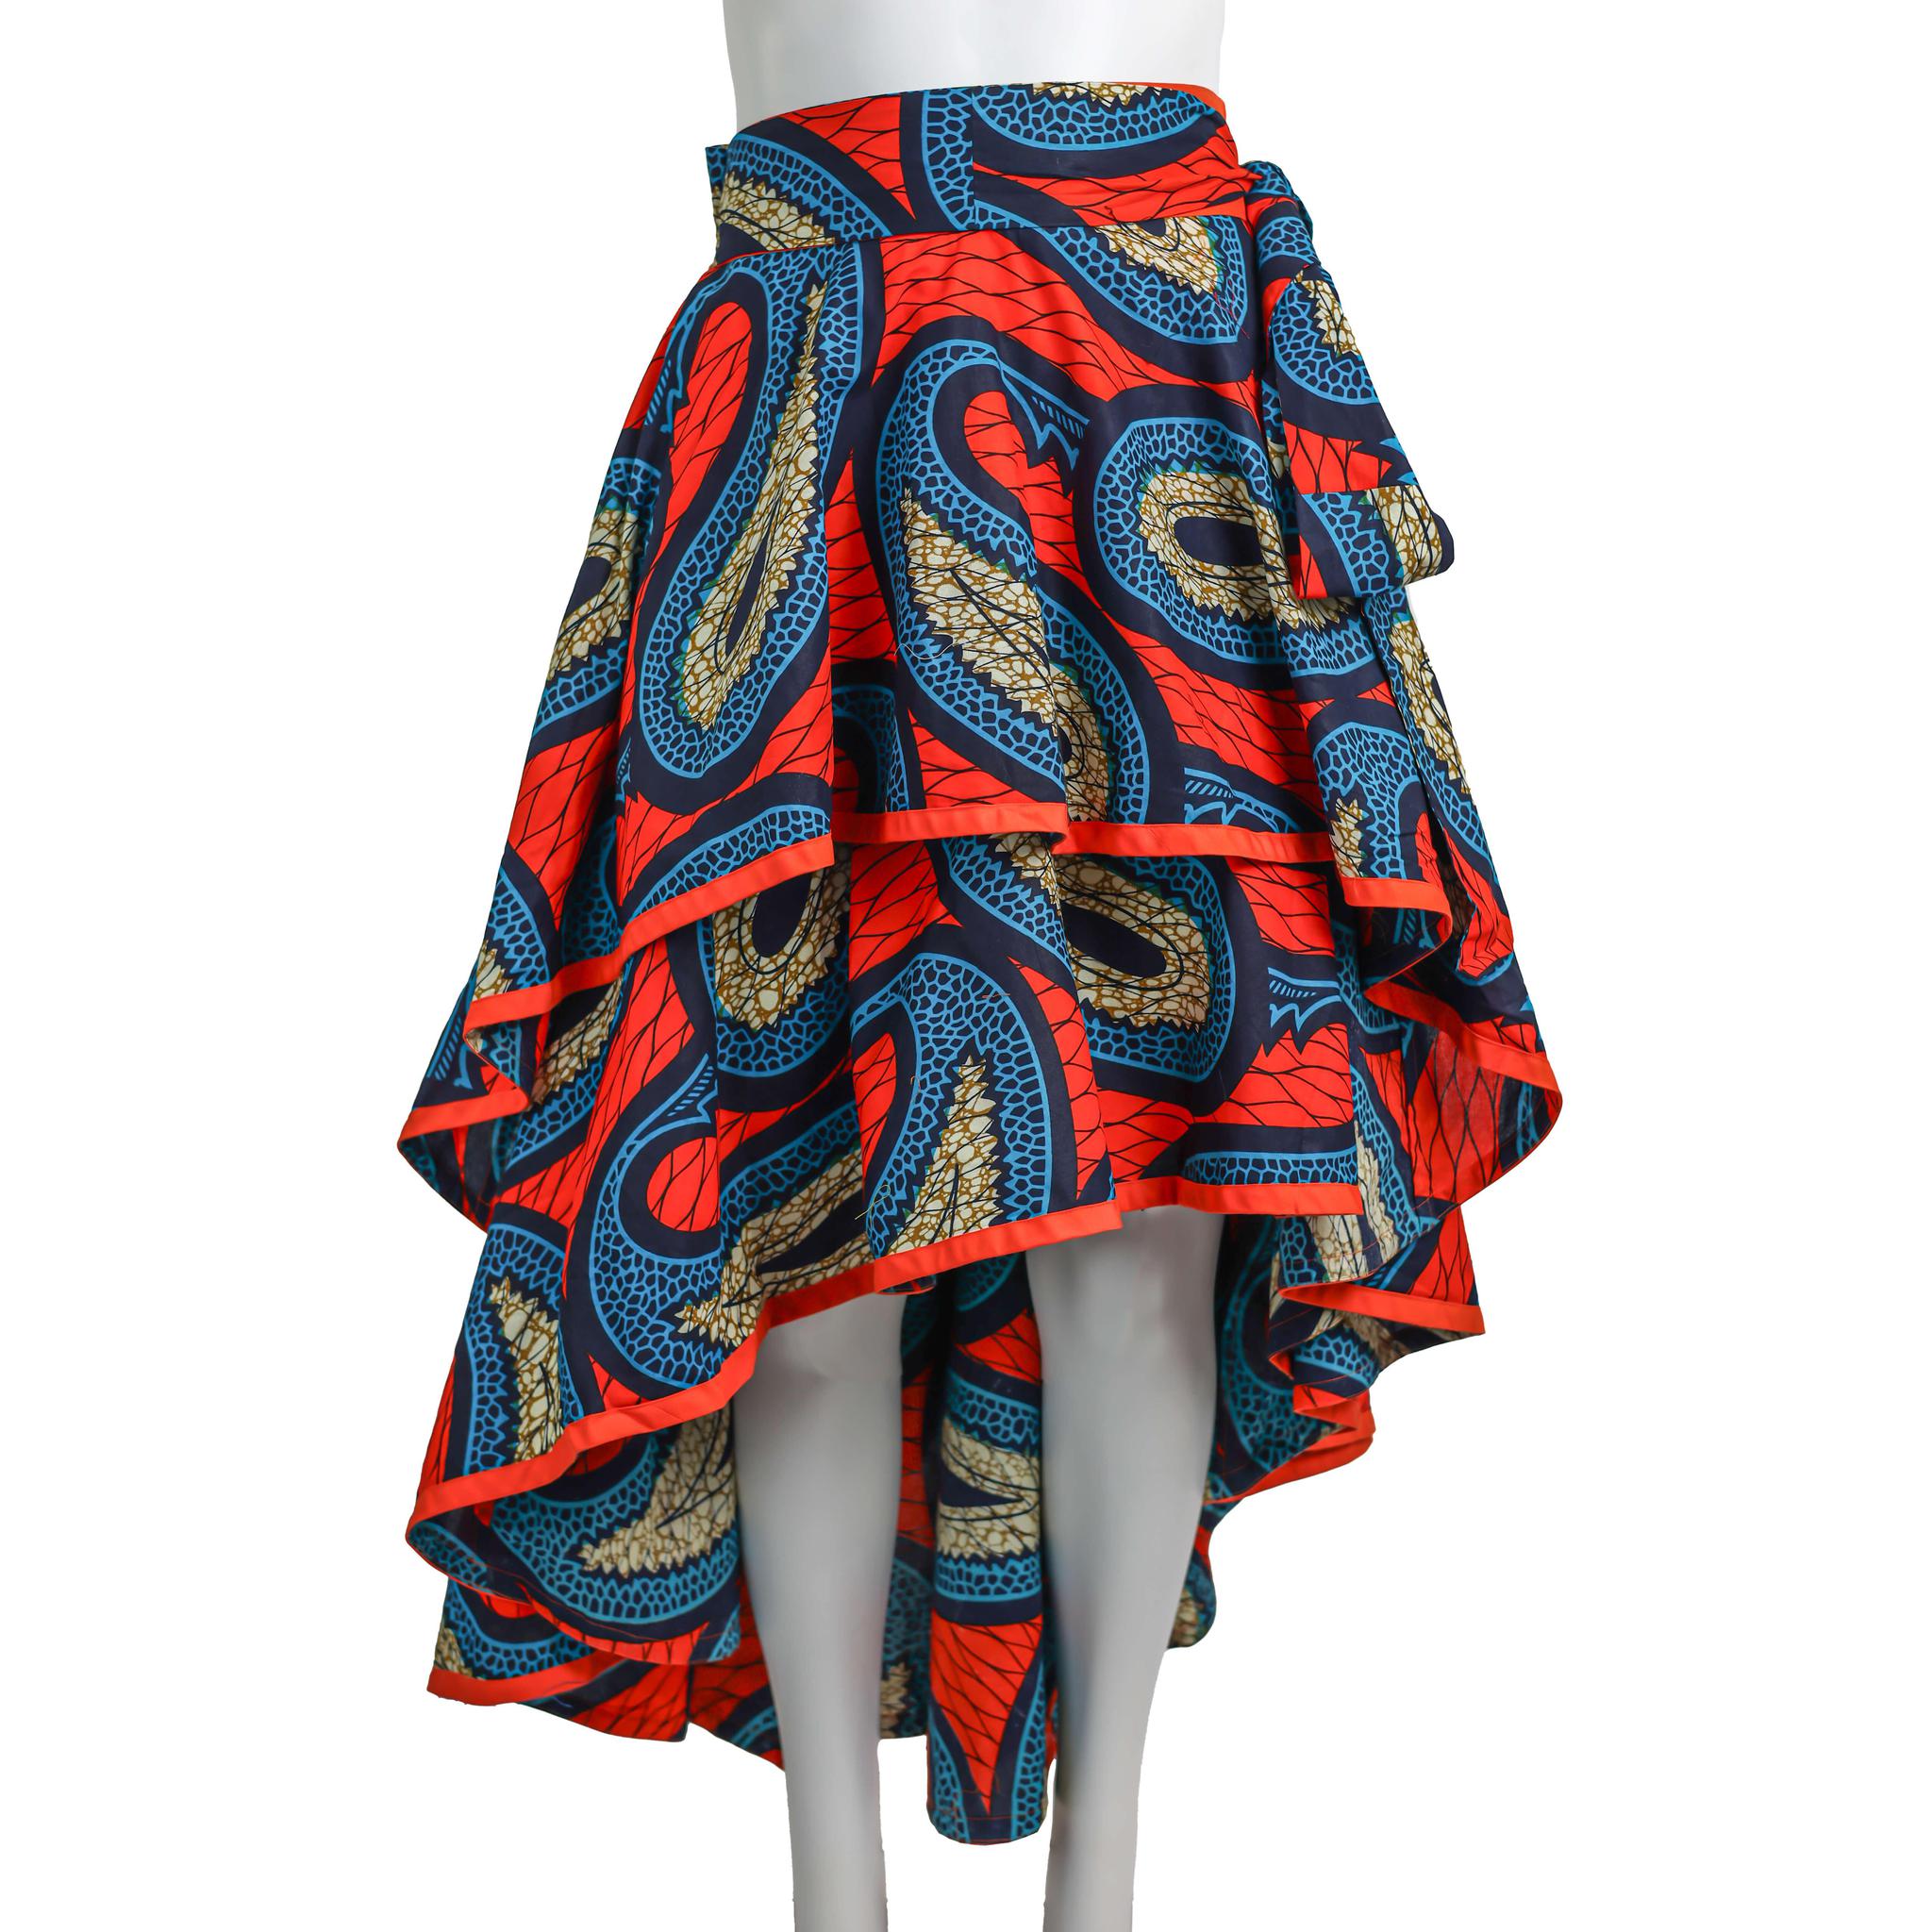 Layered Ankara Skirt with Belt